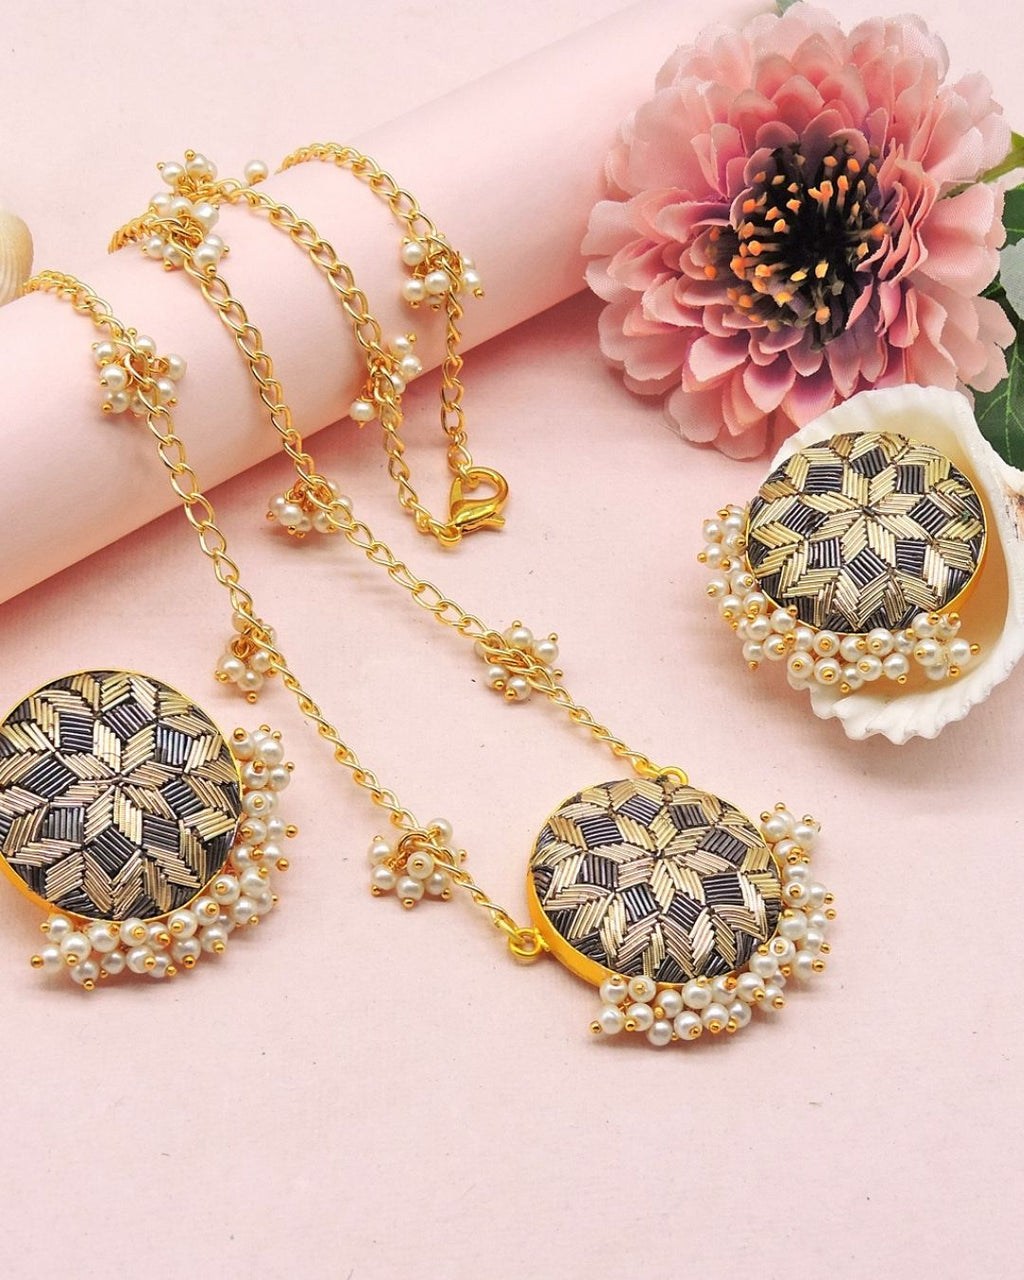 Zardosi Star Necklace - Necklaces - Handcrafted Jewellery - Made in India - Dubai Jewellery, Fashion & Lifestyle - Dori